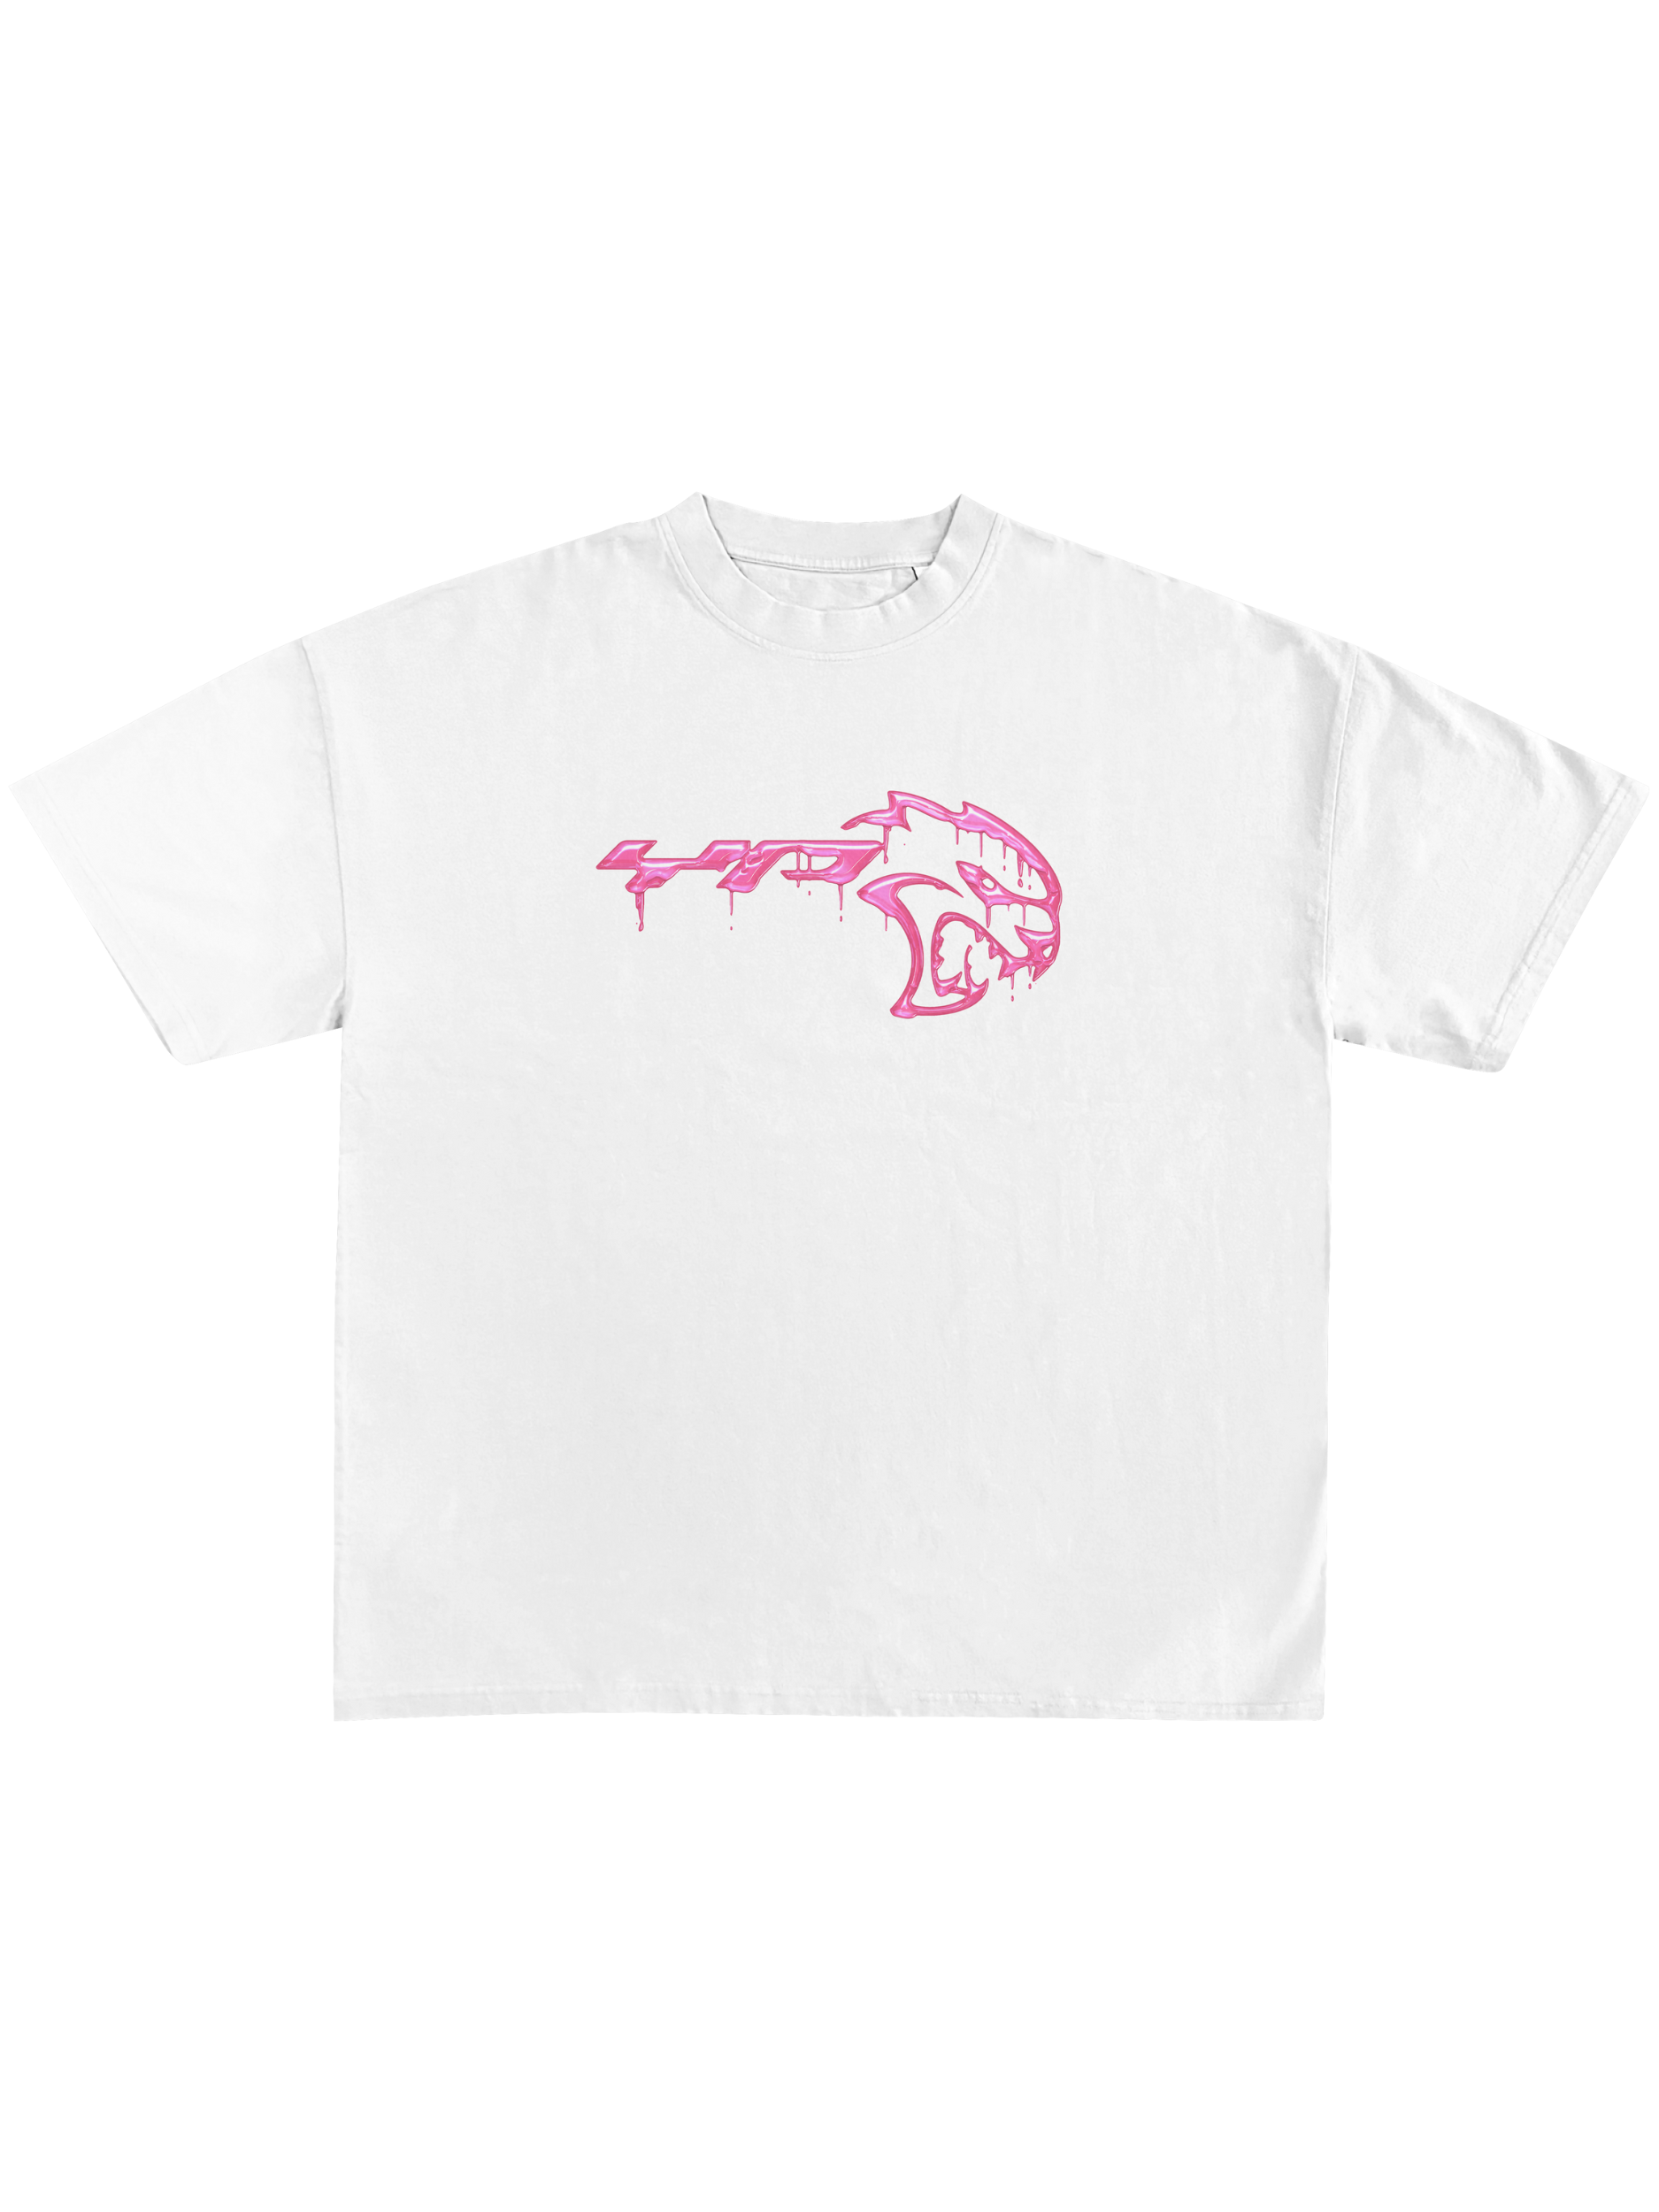 FreshmanOfTheYear - T-Shirt & CD Bundle Pink